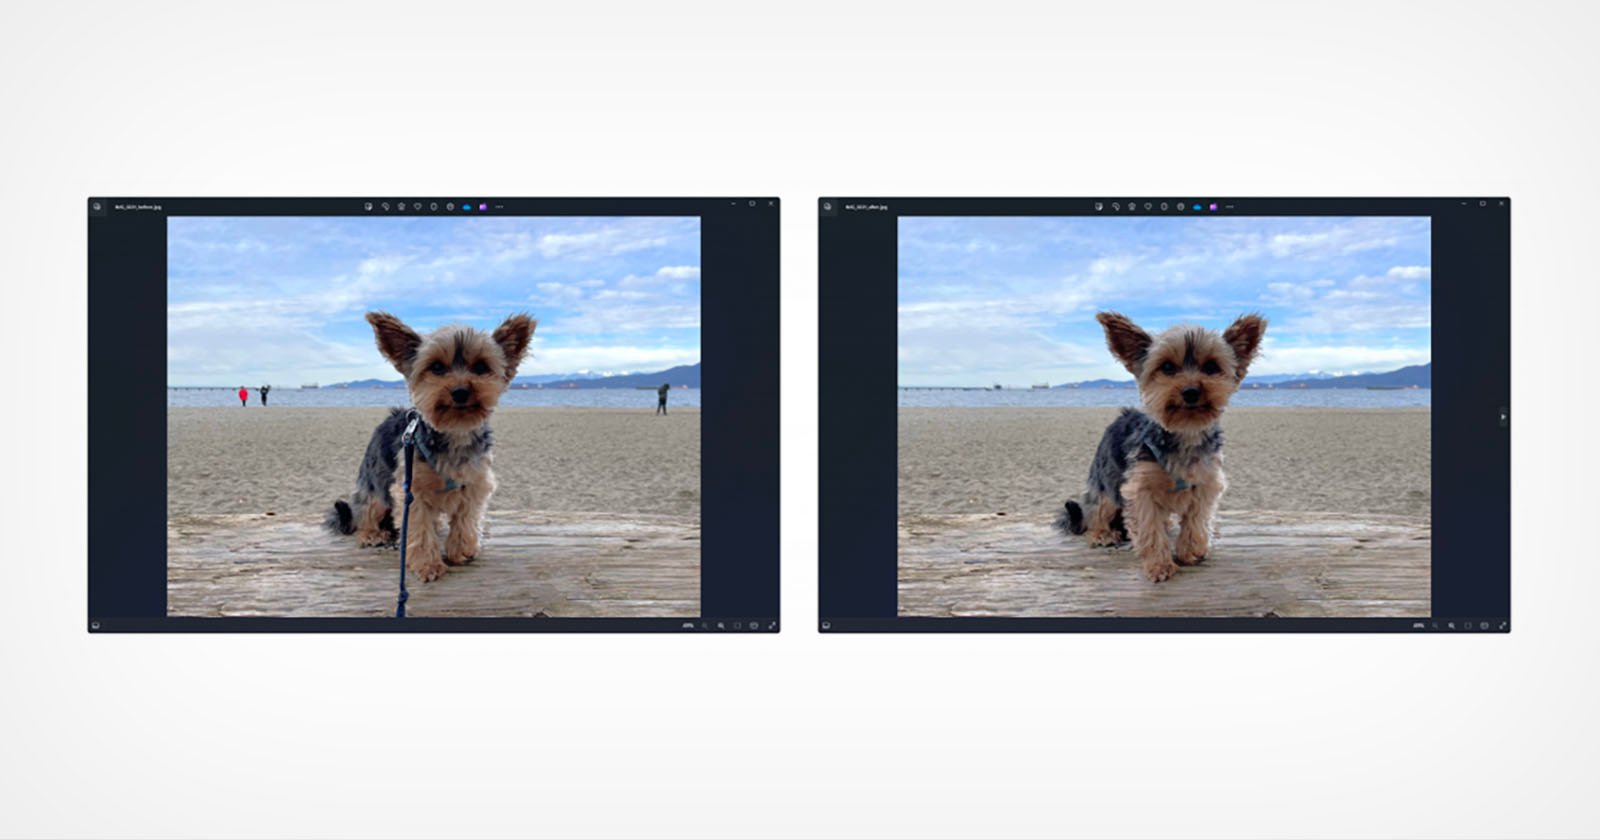 Windows Photos Now Has Generative Erase and More AI Tools